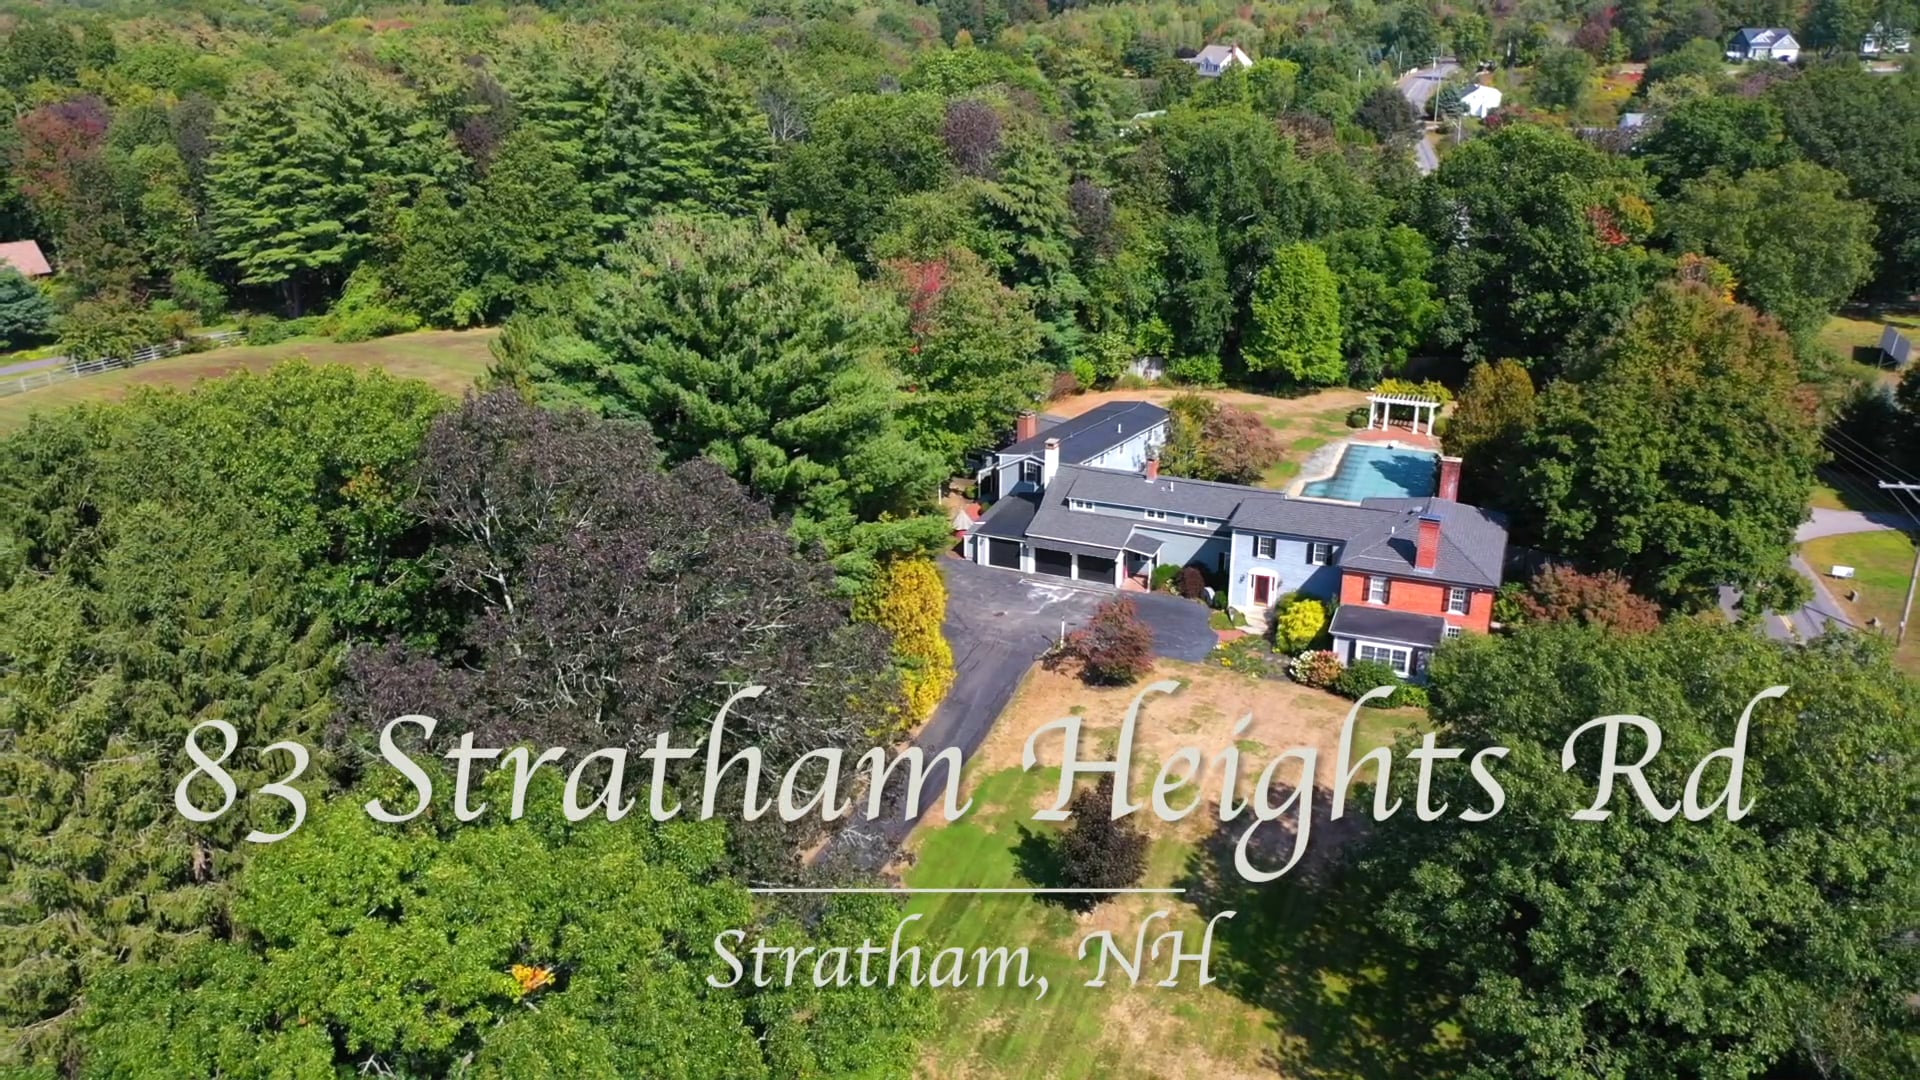 83 Stratham Heights Rd | Stratham, NH